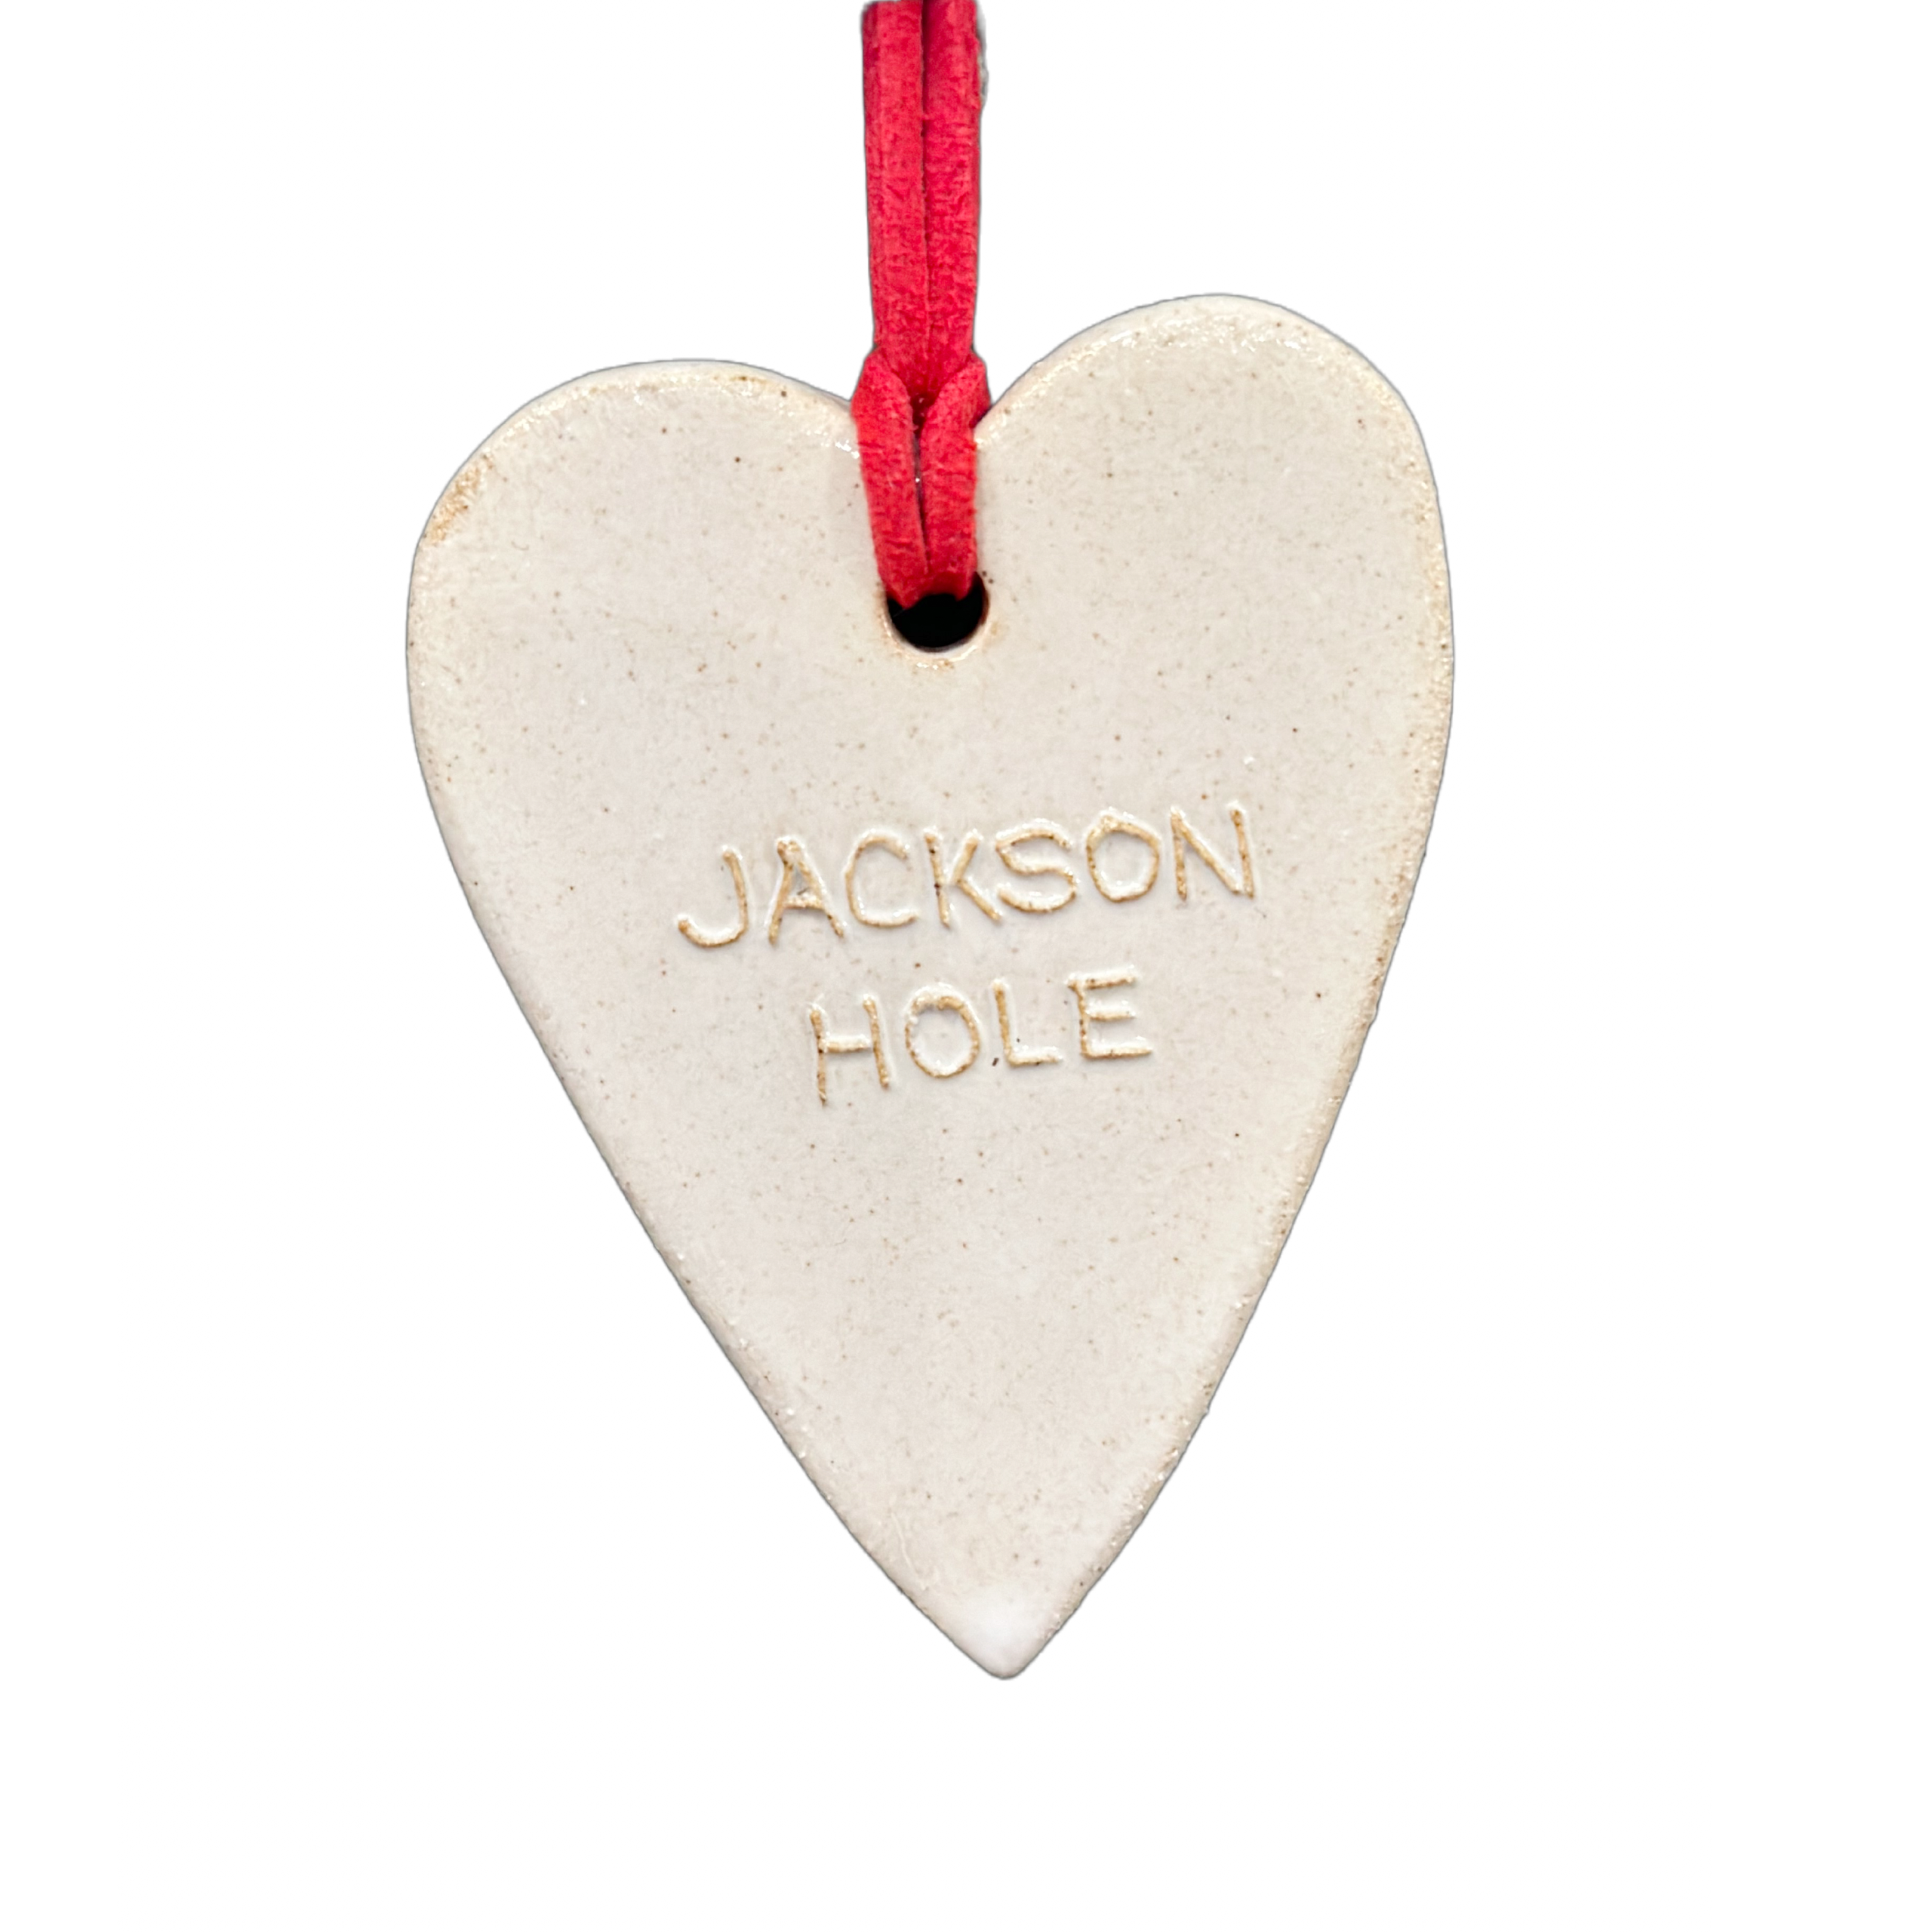 Ceramic Jackson Hole Heart Ornament